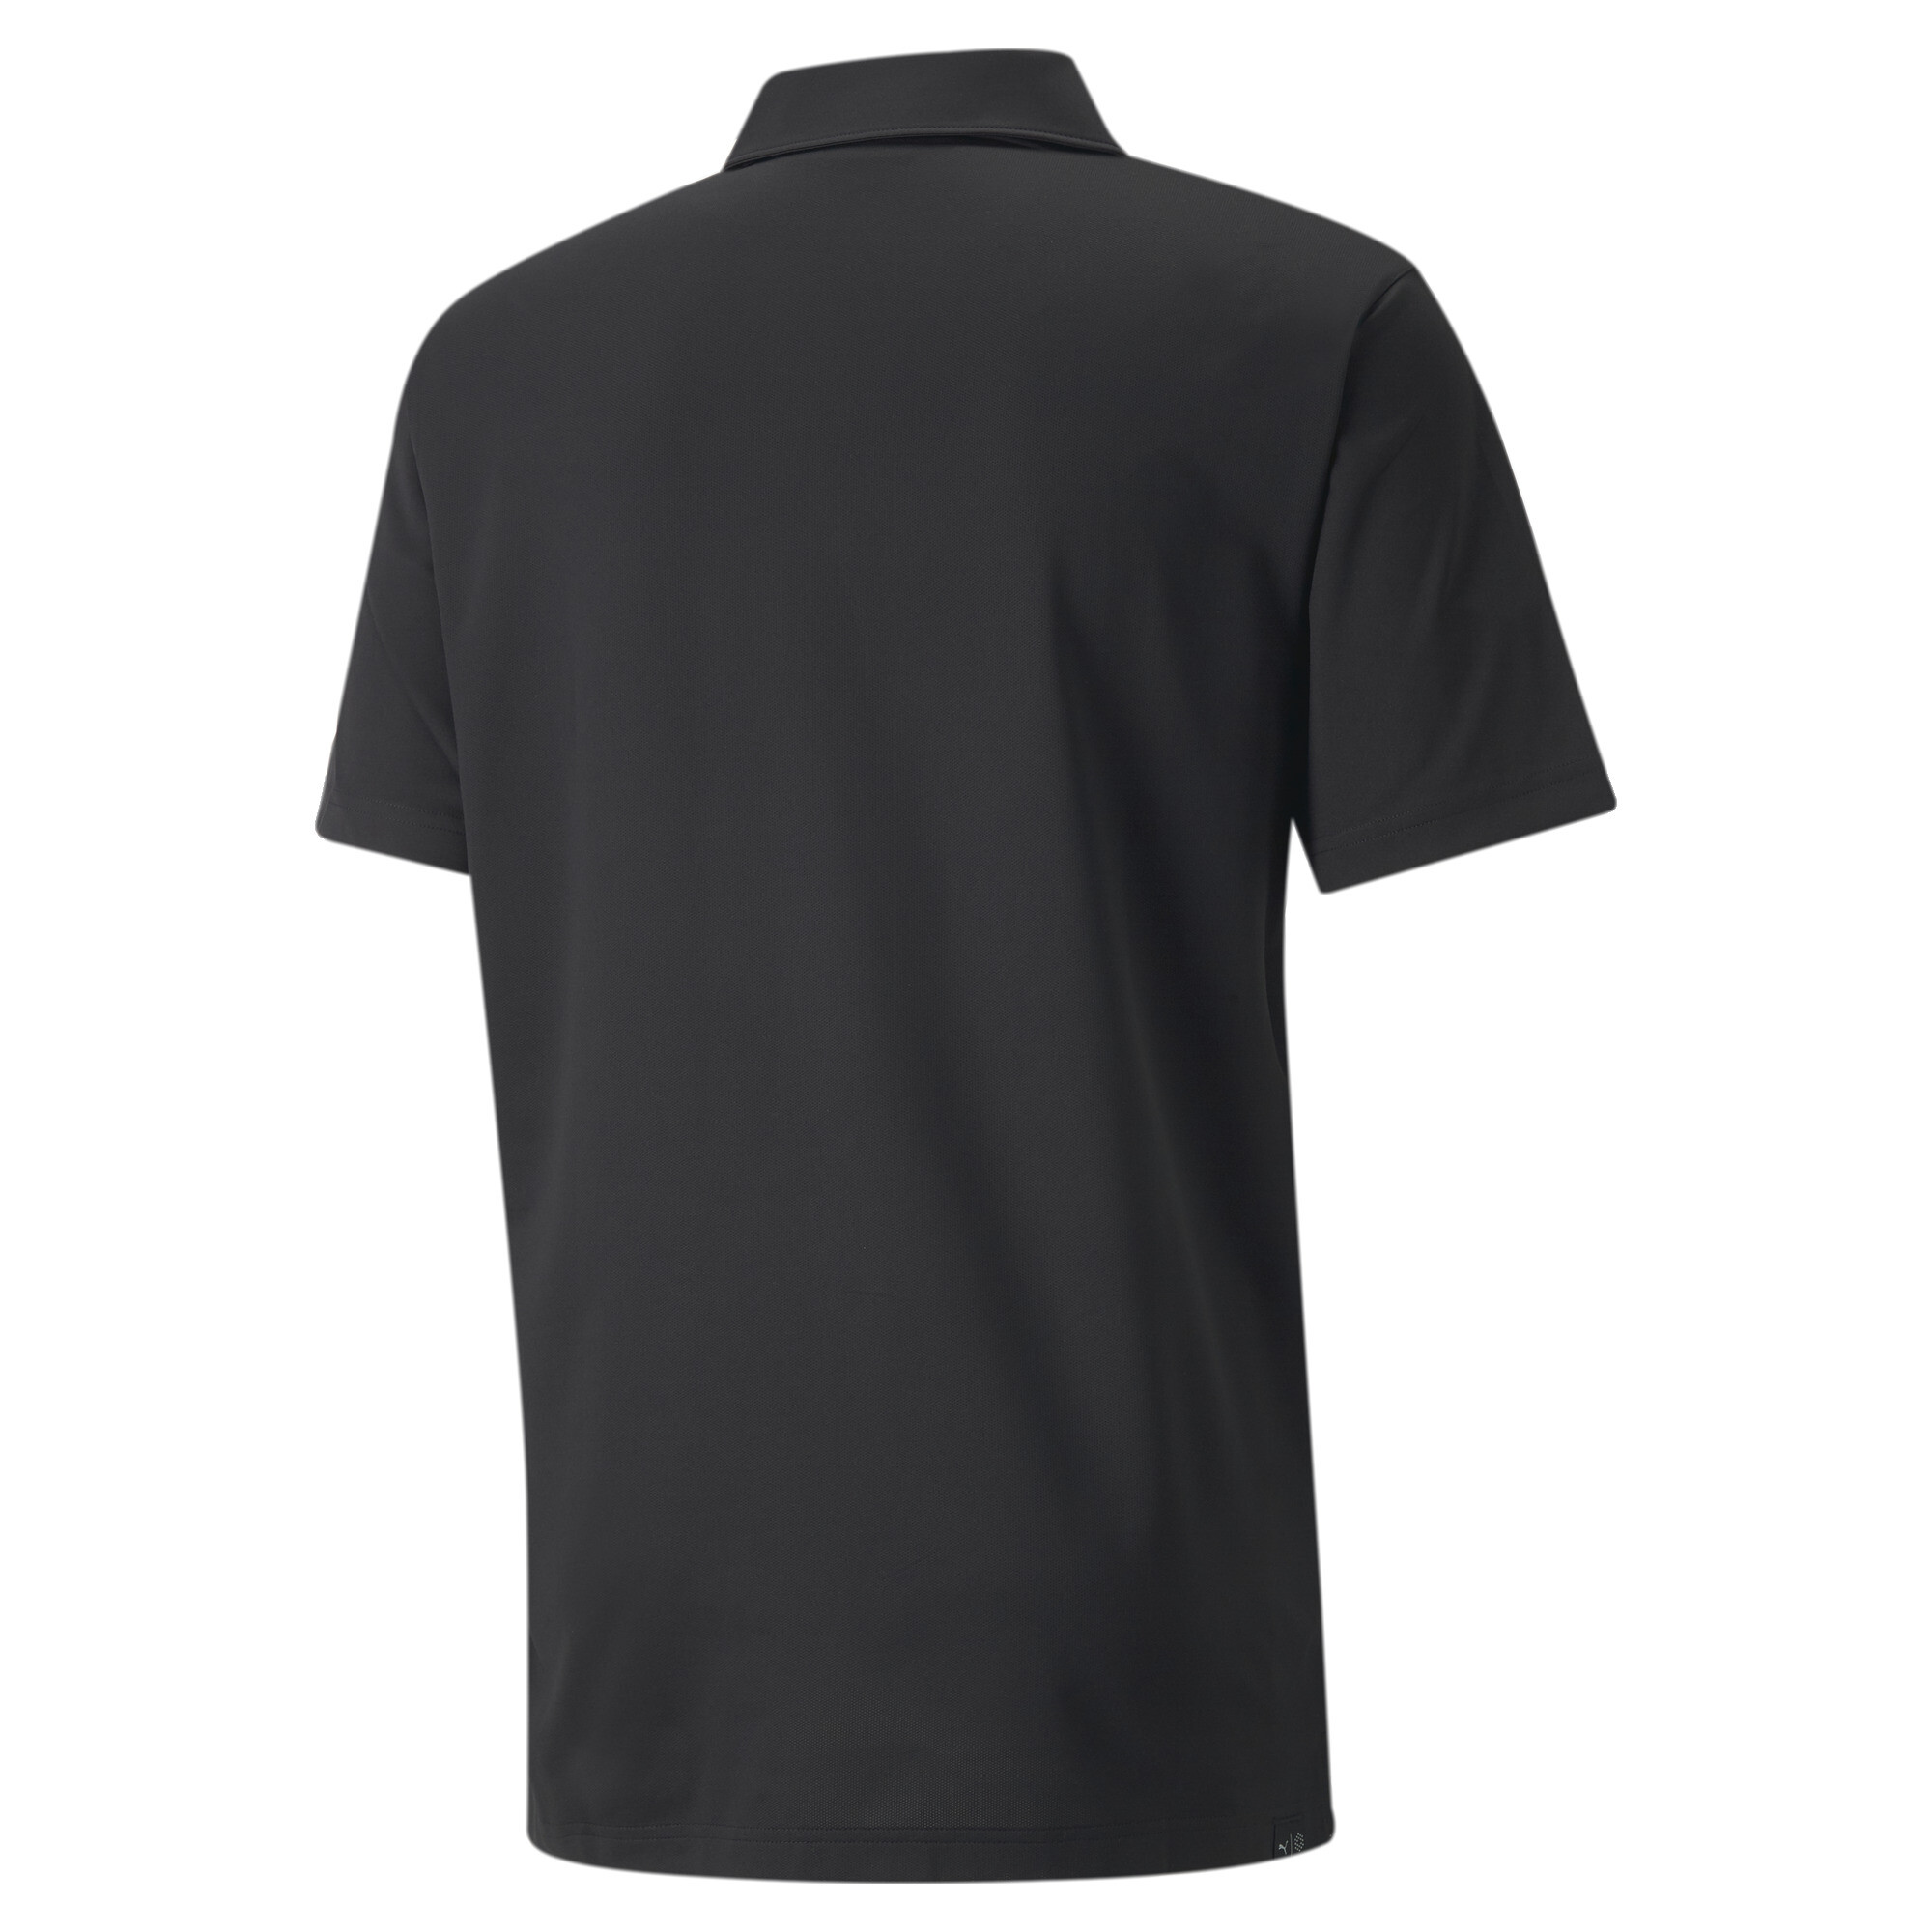 Men's Puma Gamer's Golf Polo Shirt T-Shirt, Black T-Shirt, Size S T-Shirt, Clothing